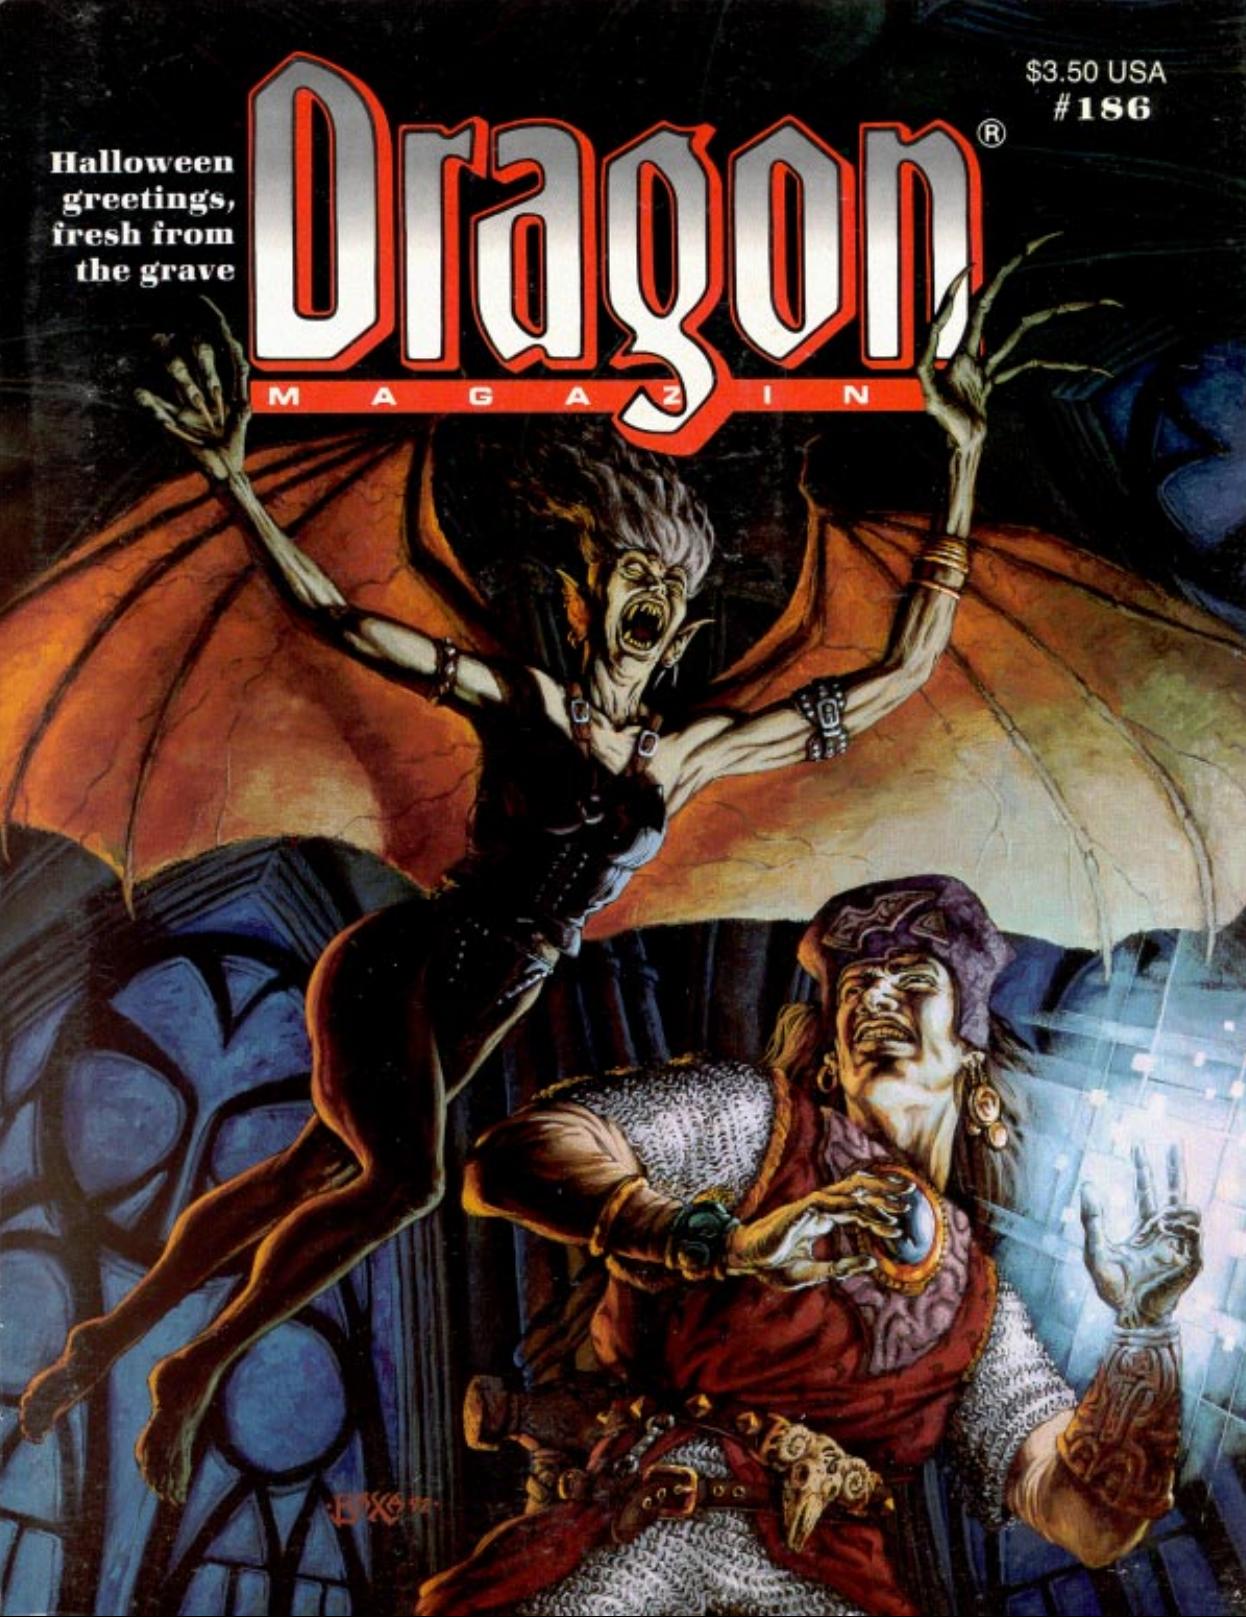 Dragon Magazine #186